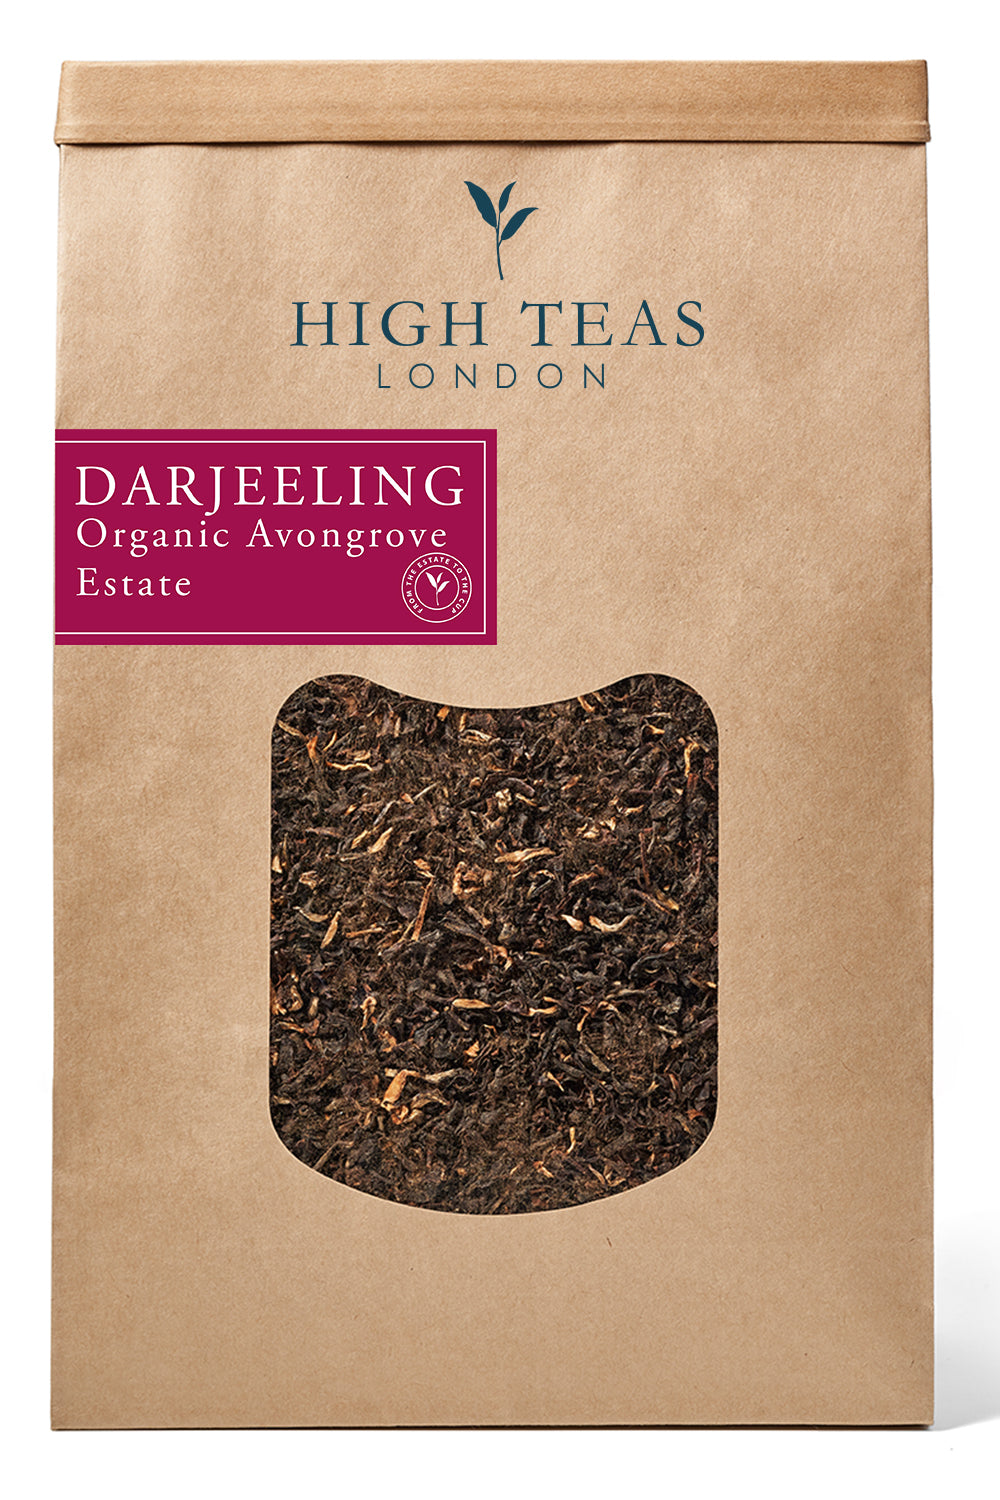 Darjeeling - 2nd Flush Organic FTGFOP1, Avongrove Estate-500g-Loose Leaf Tea-High Teas